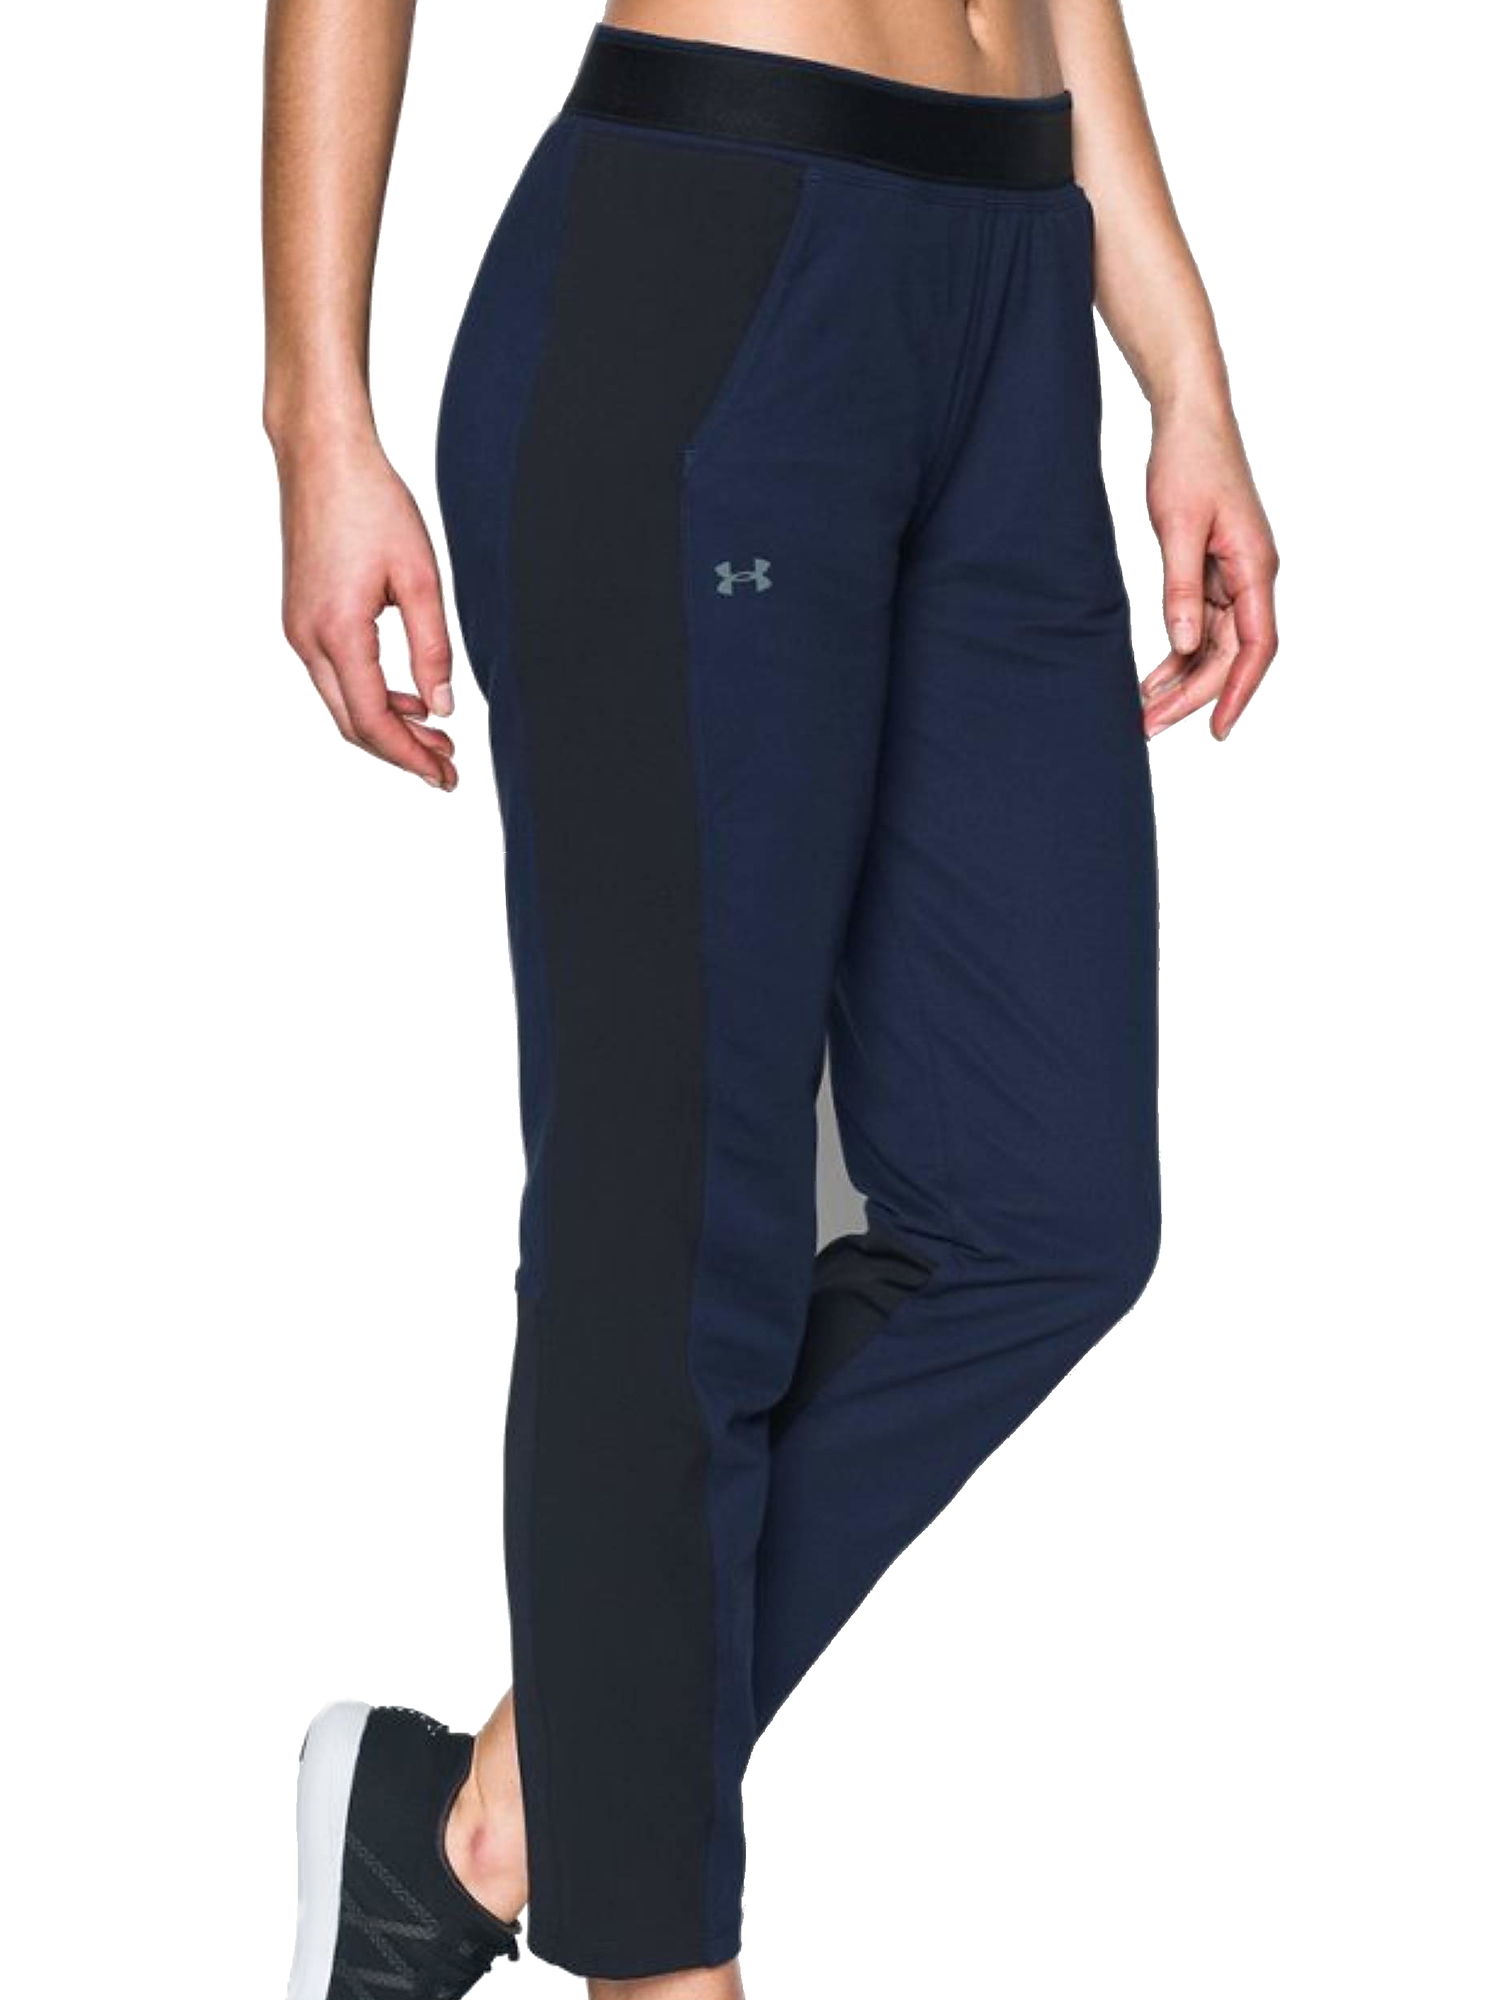 Under Armour Leisure Trousers Women Midnight Navy/Black HeatGear Sweatpants $100